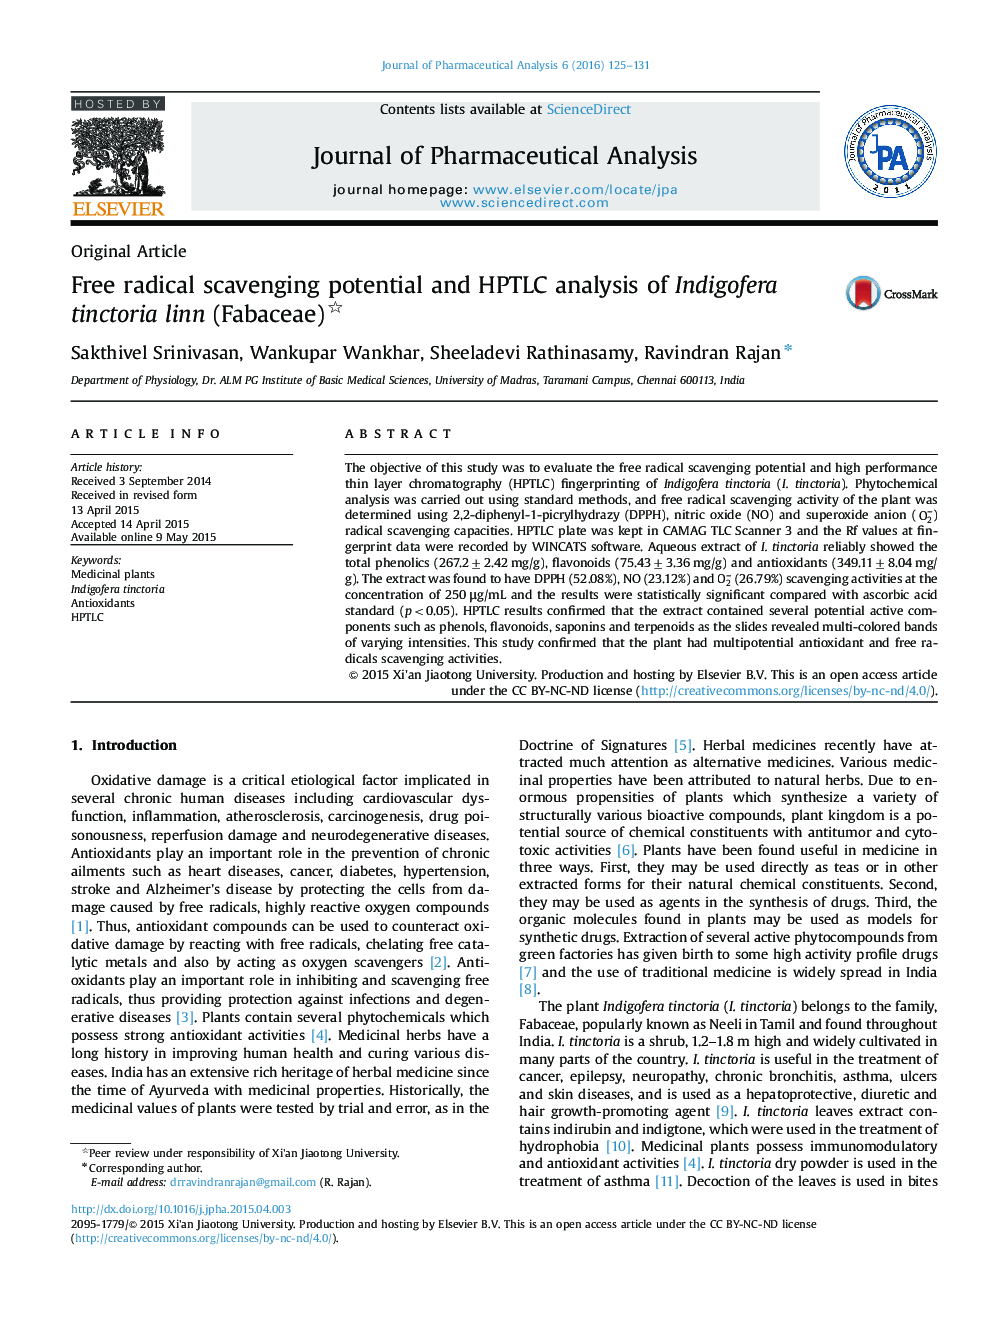 Free radical scavenging potential and HPTLC analysis of Indigofera tinctoria linn (Fabaceae) 